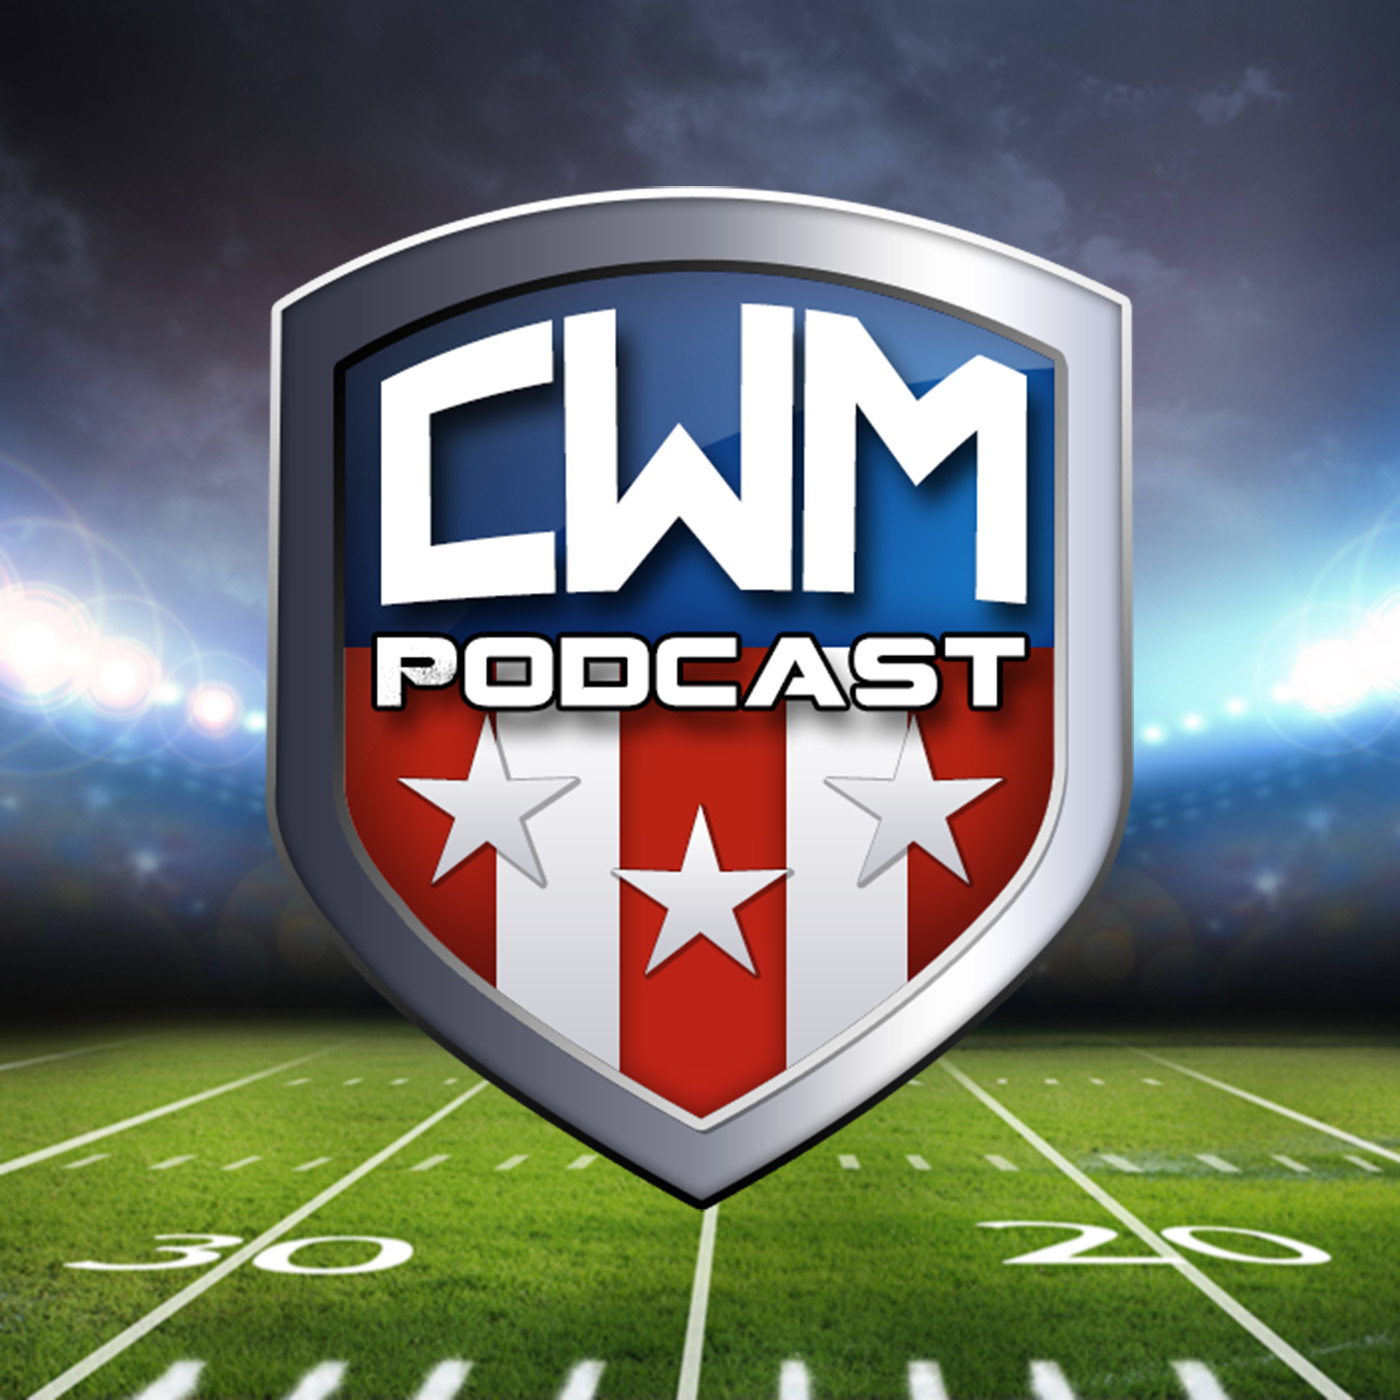 NFL Combine kicks off with Jon Ledyard, Eric Berry, Jared Allen - CWM012